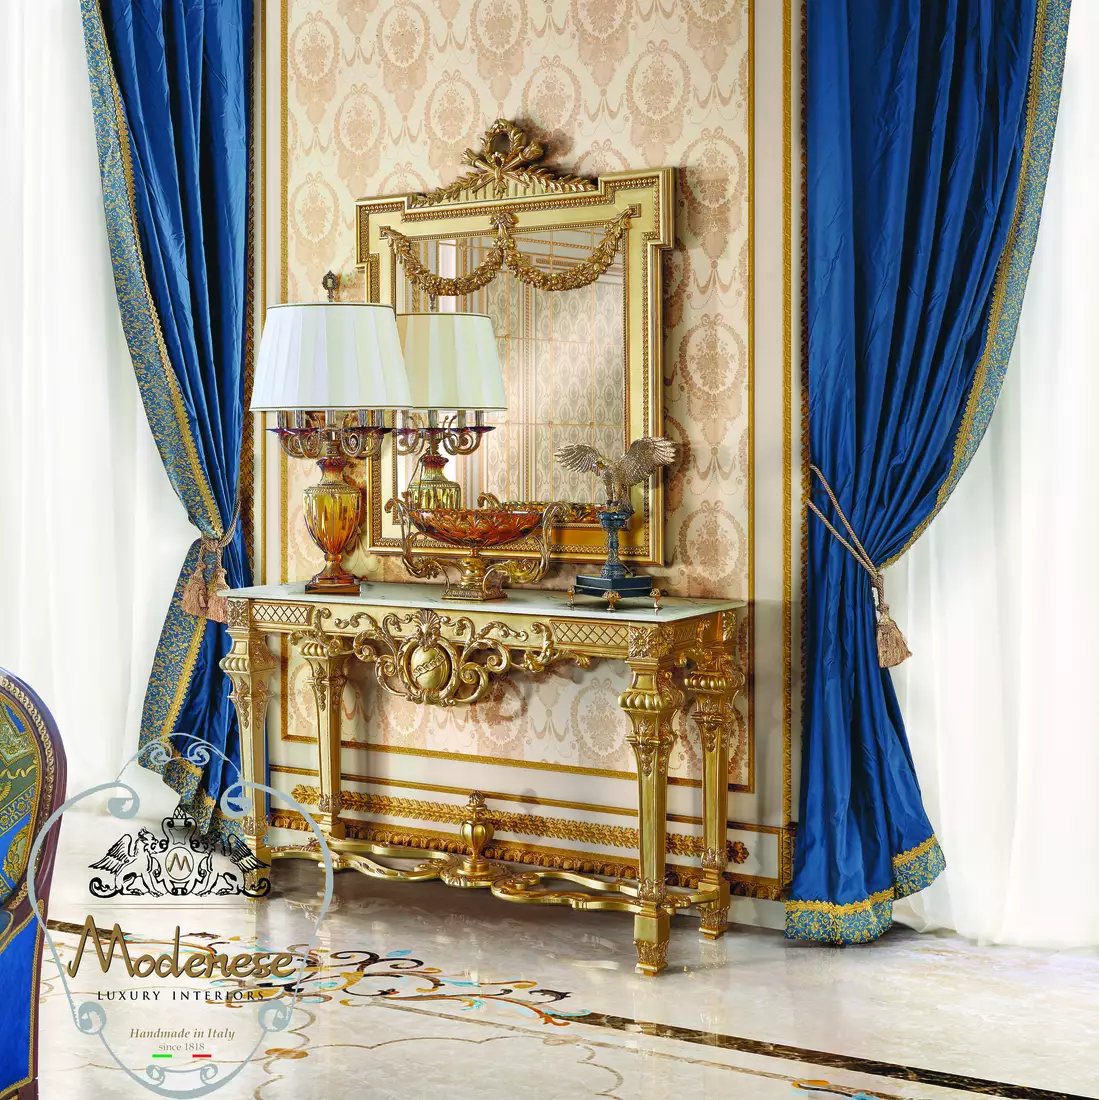 Modenese Luxury Interiors Imperial (22)